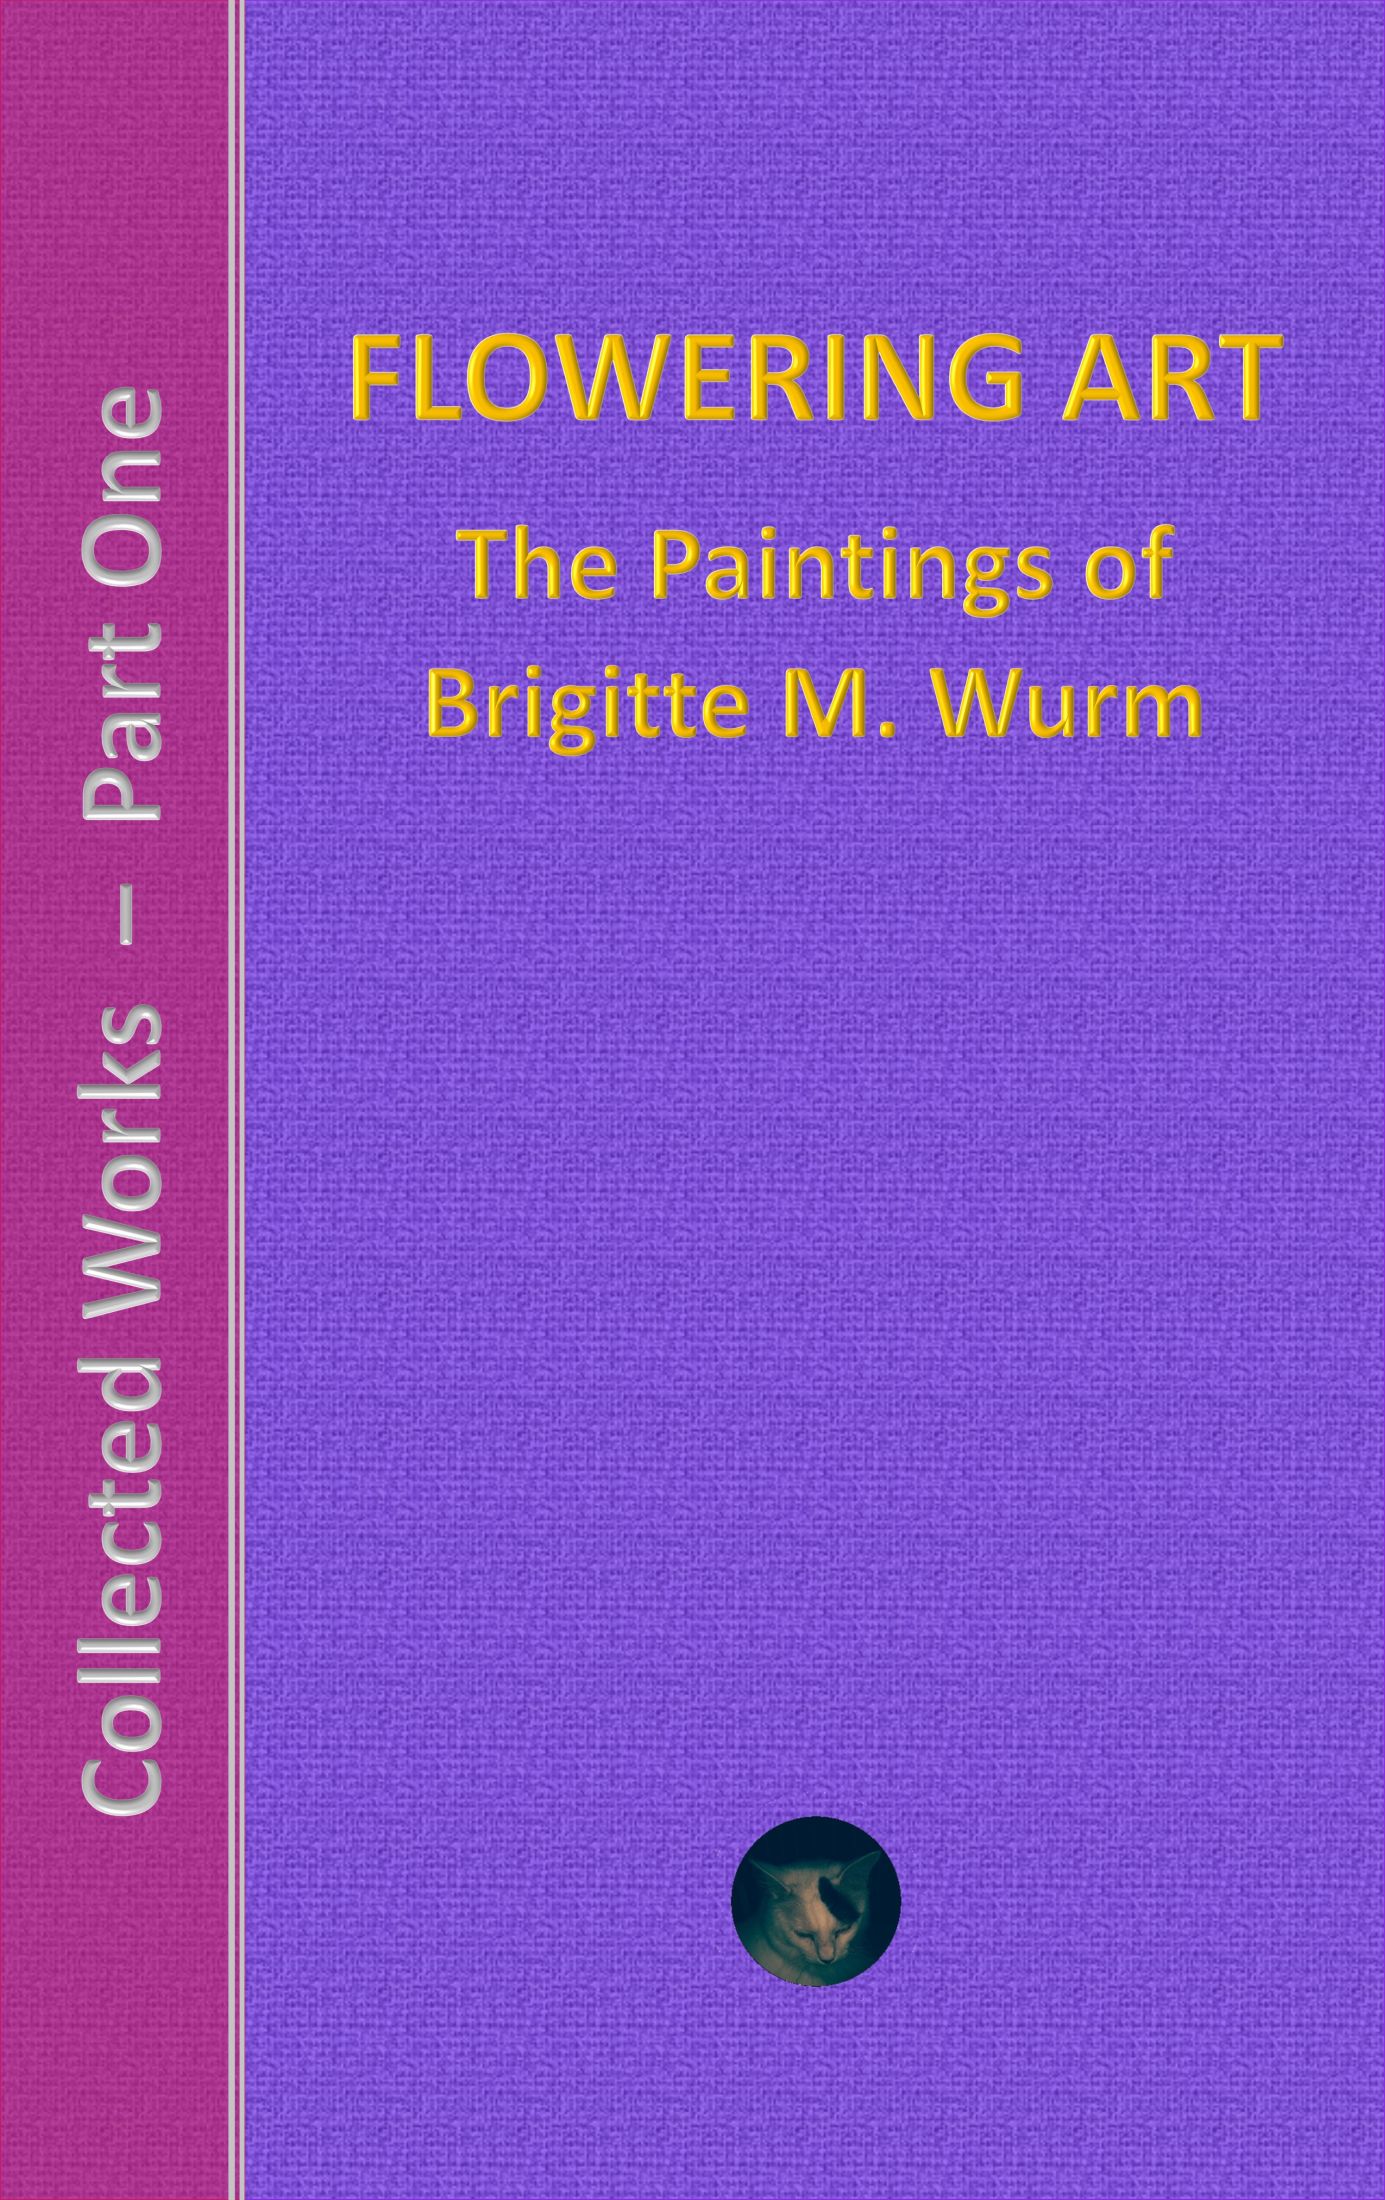 Brigitte M. Wurm: Collected Works - Part One